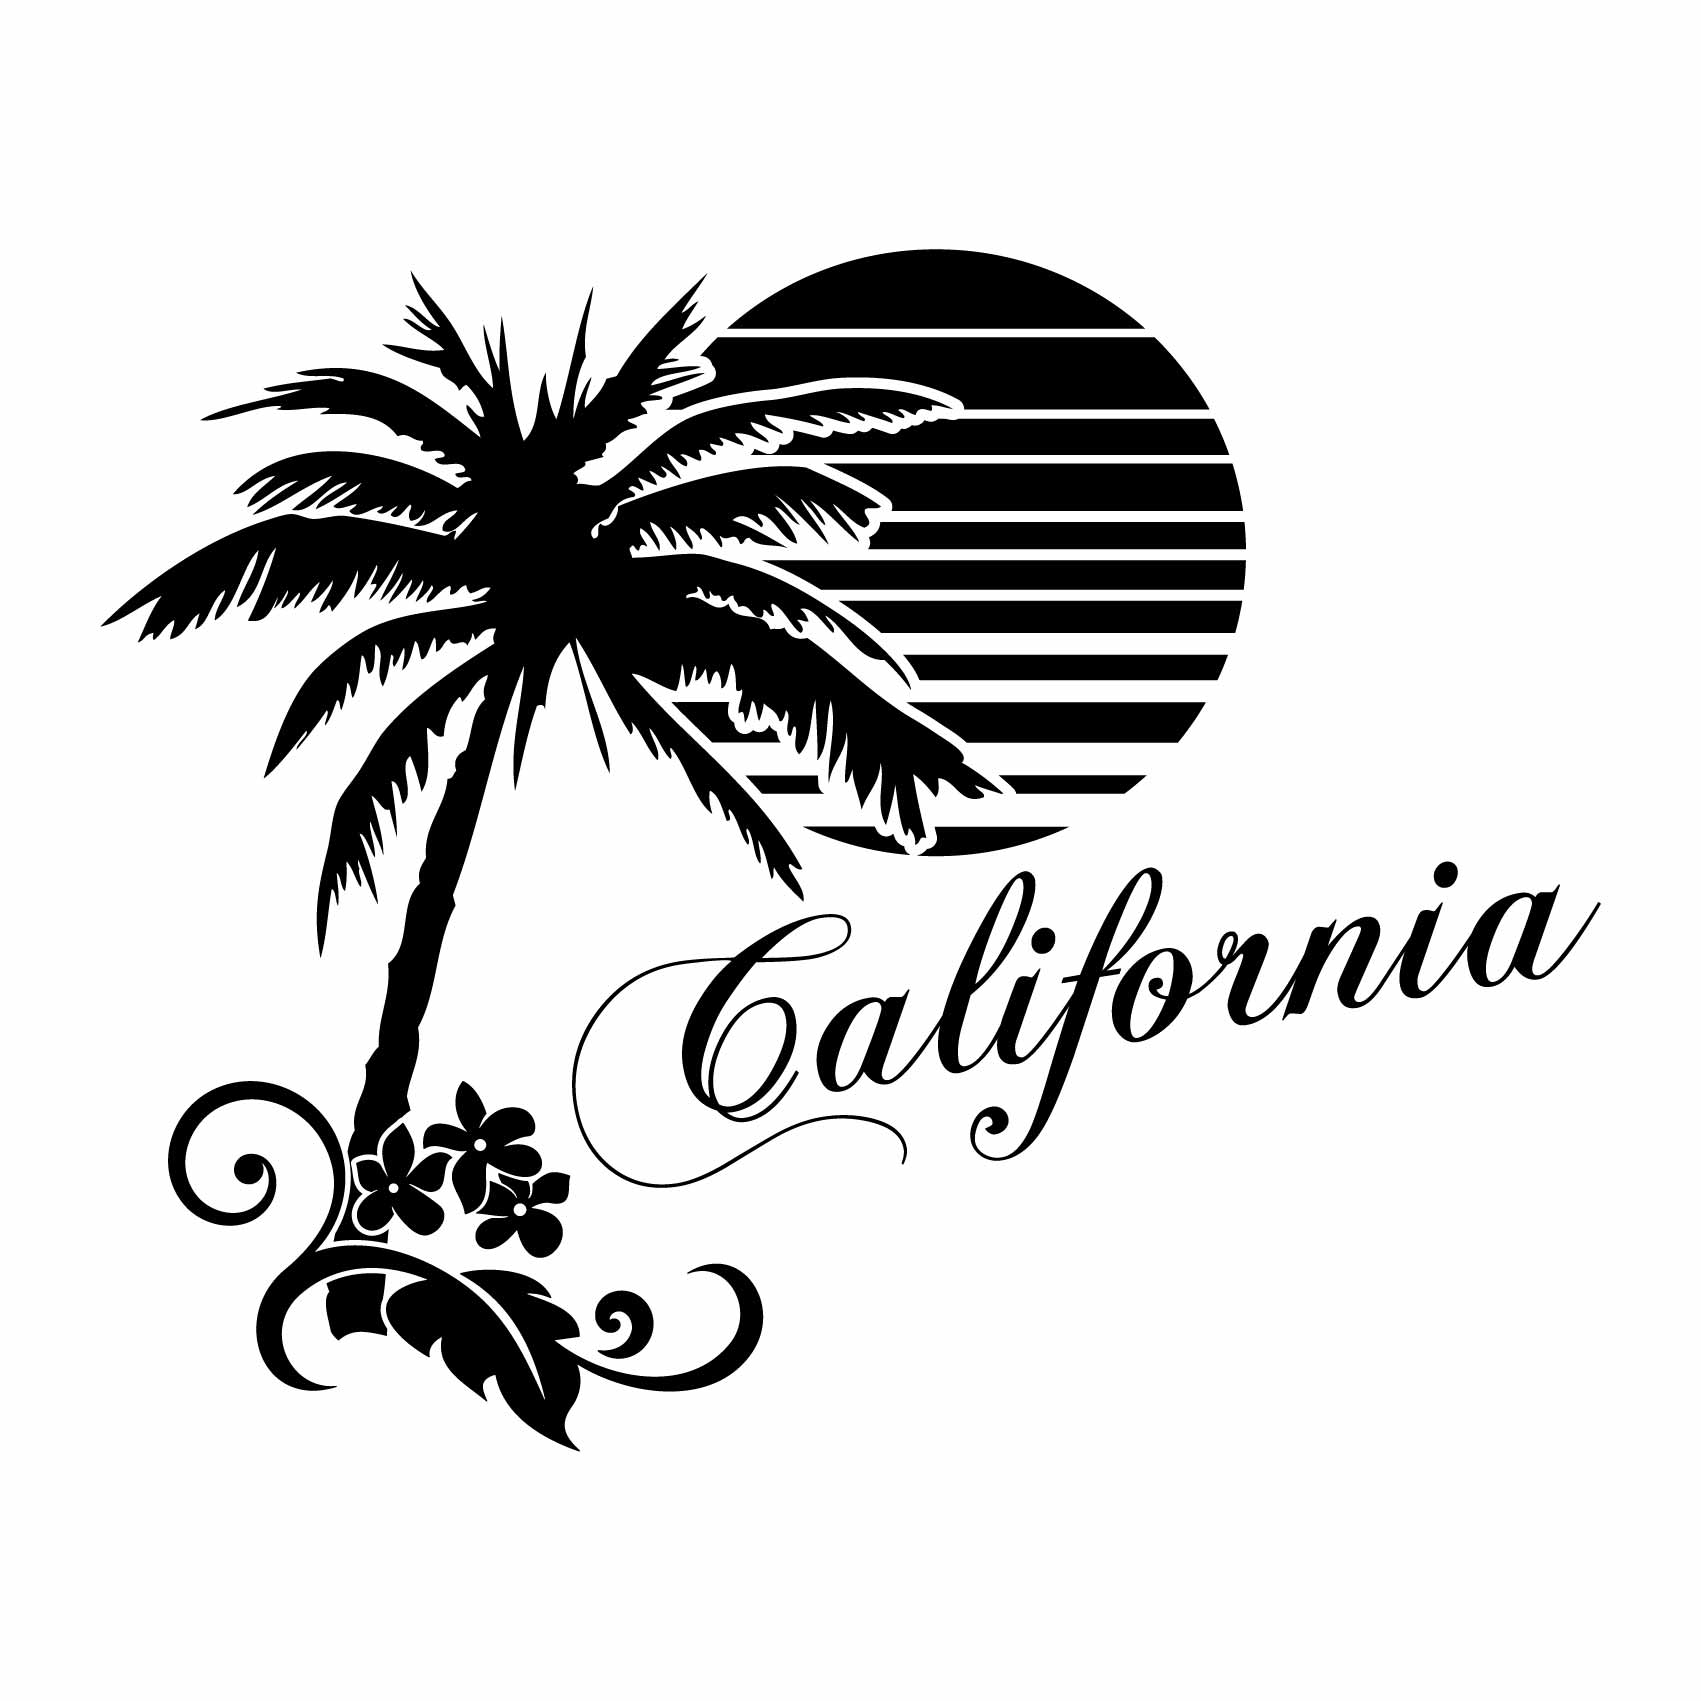 stickers-californie-ref4USA-stickers-muraux-usa-autocollant-etat-unis-deco-sticker-mural-amerique-salon-chambre-voyage-travel-(2)